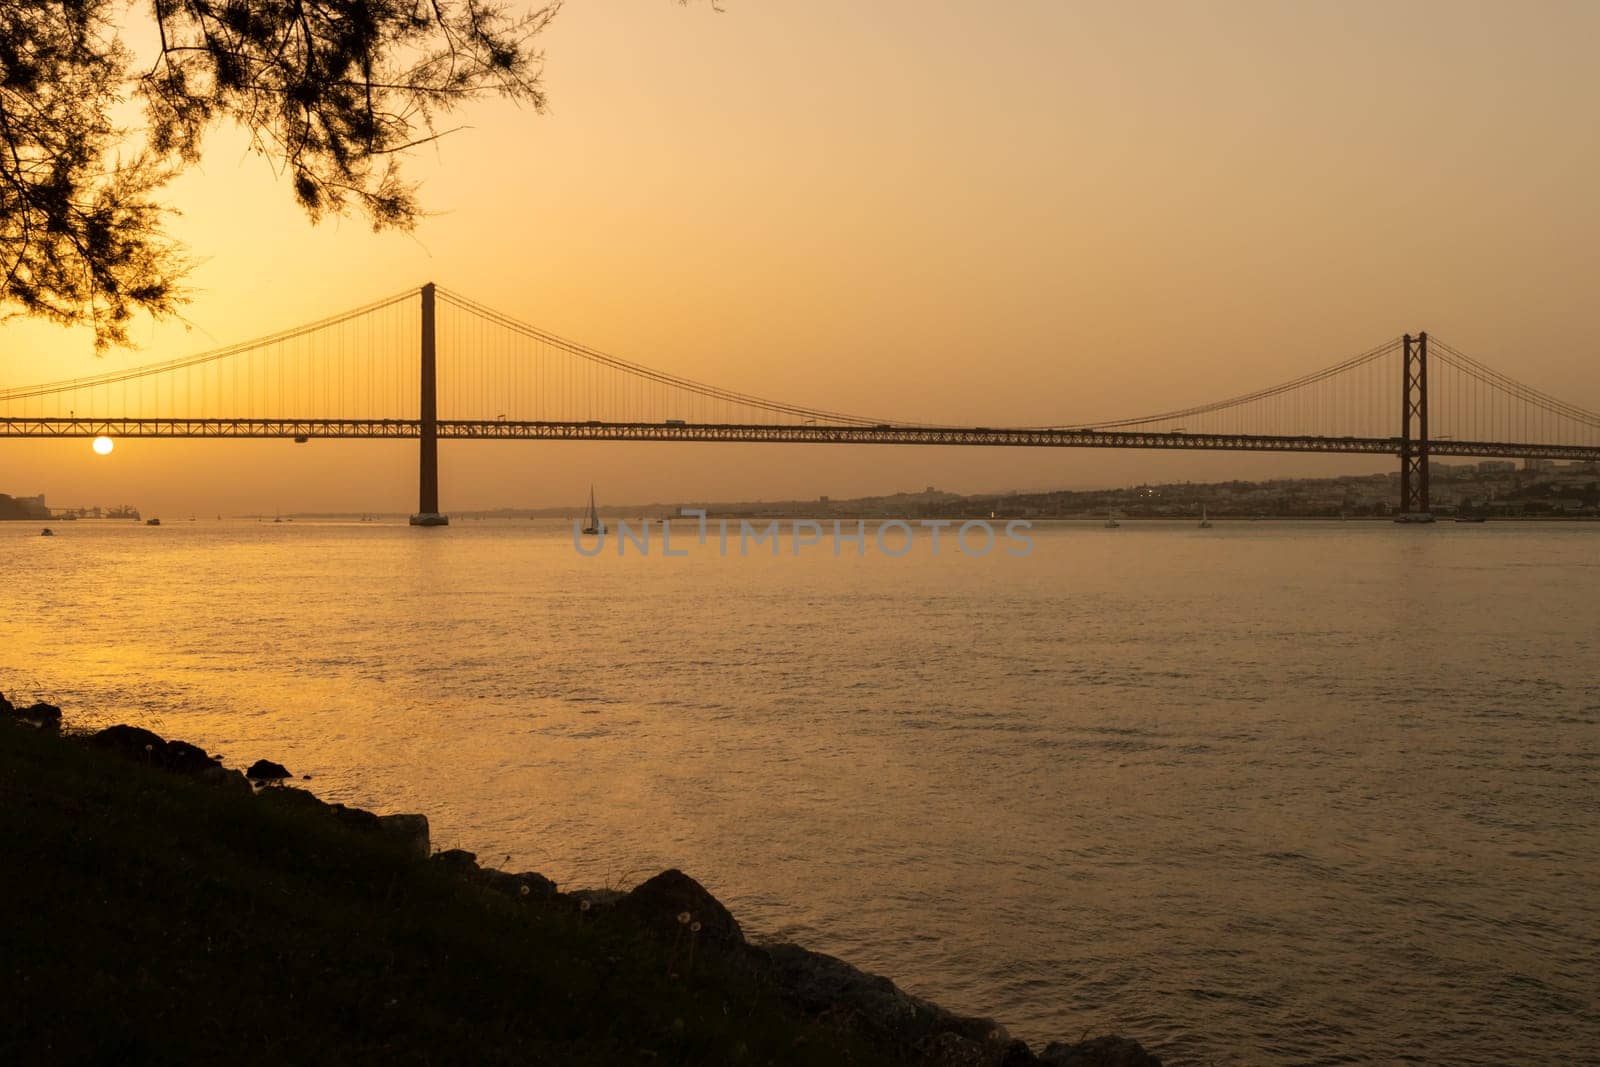 25th of April Bridge - Sunset over Tejo river in Lisbon by Studia72